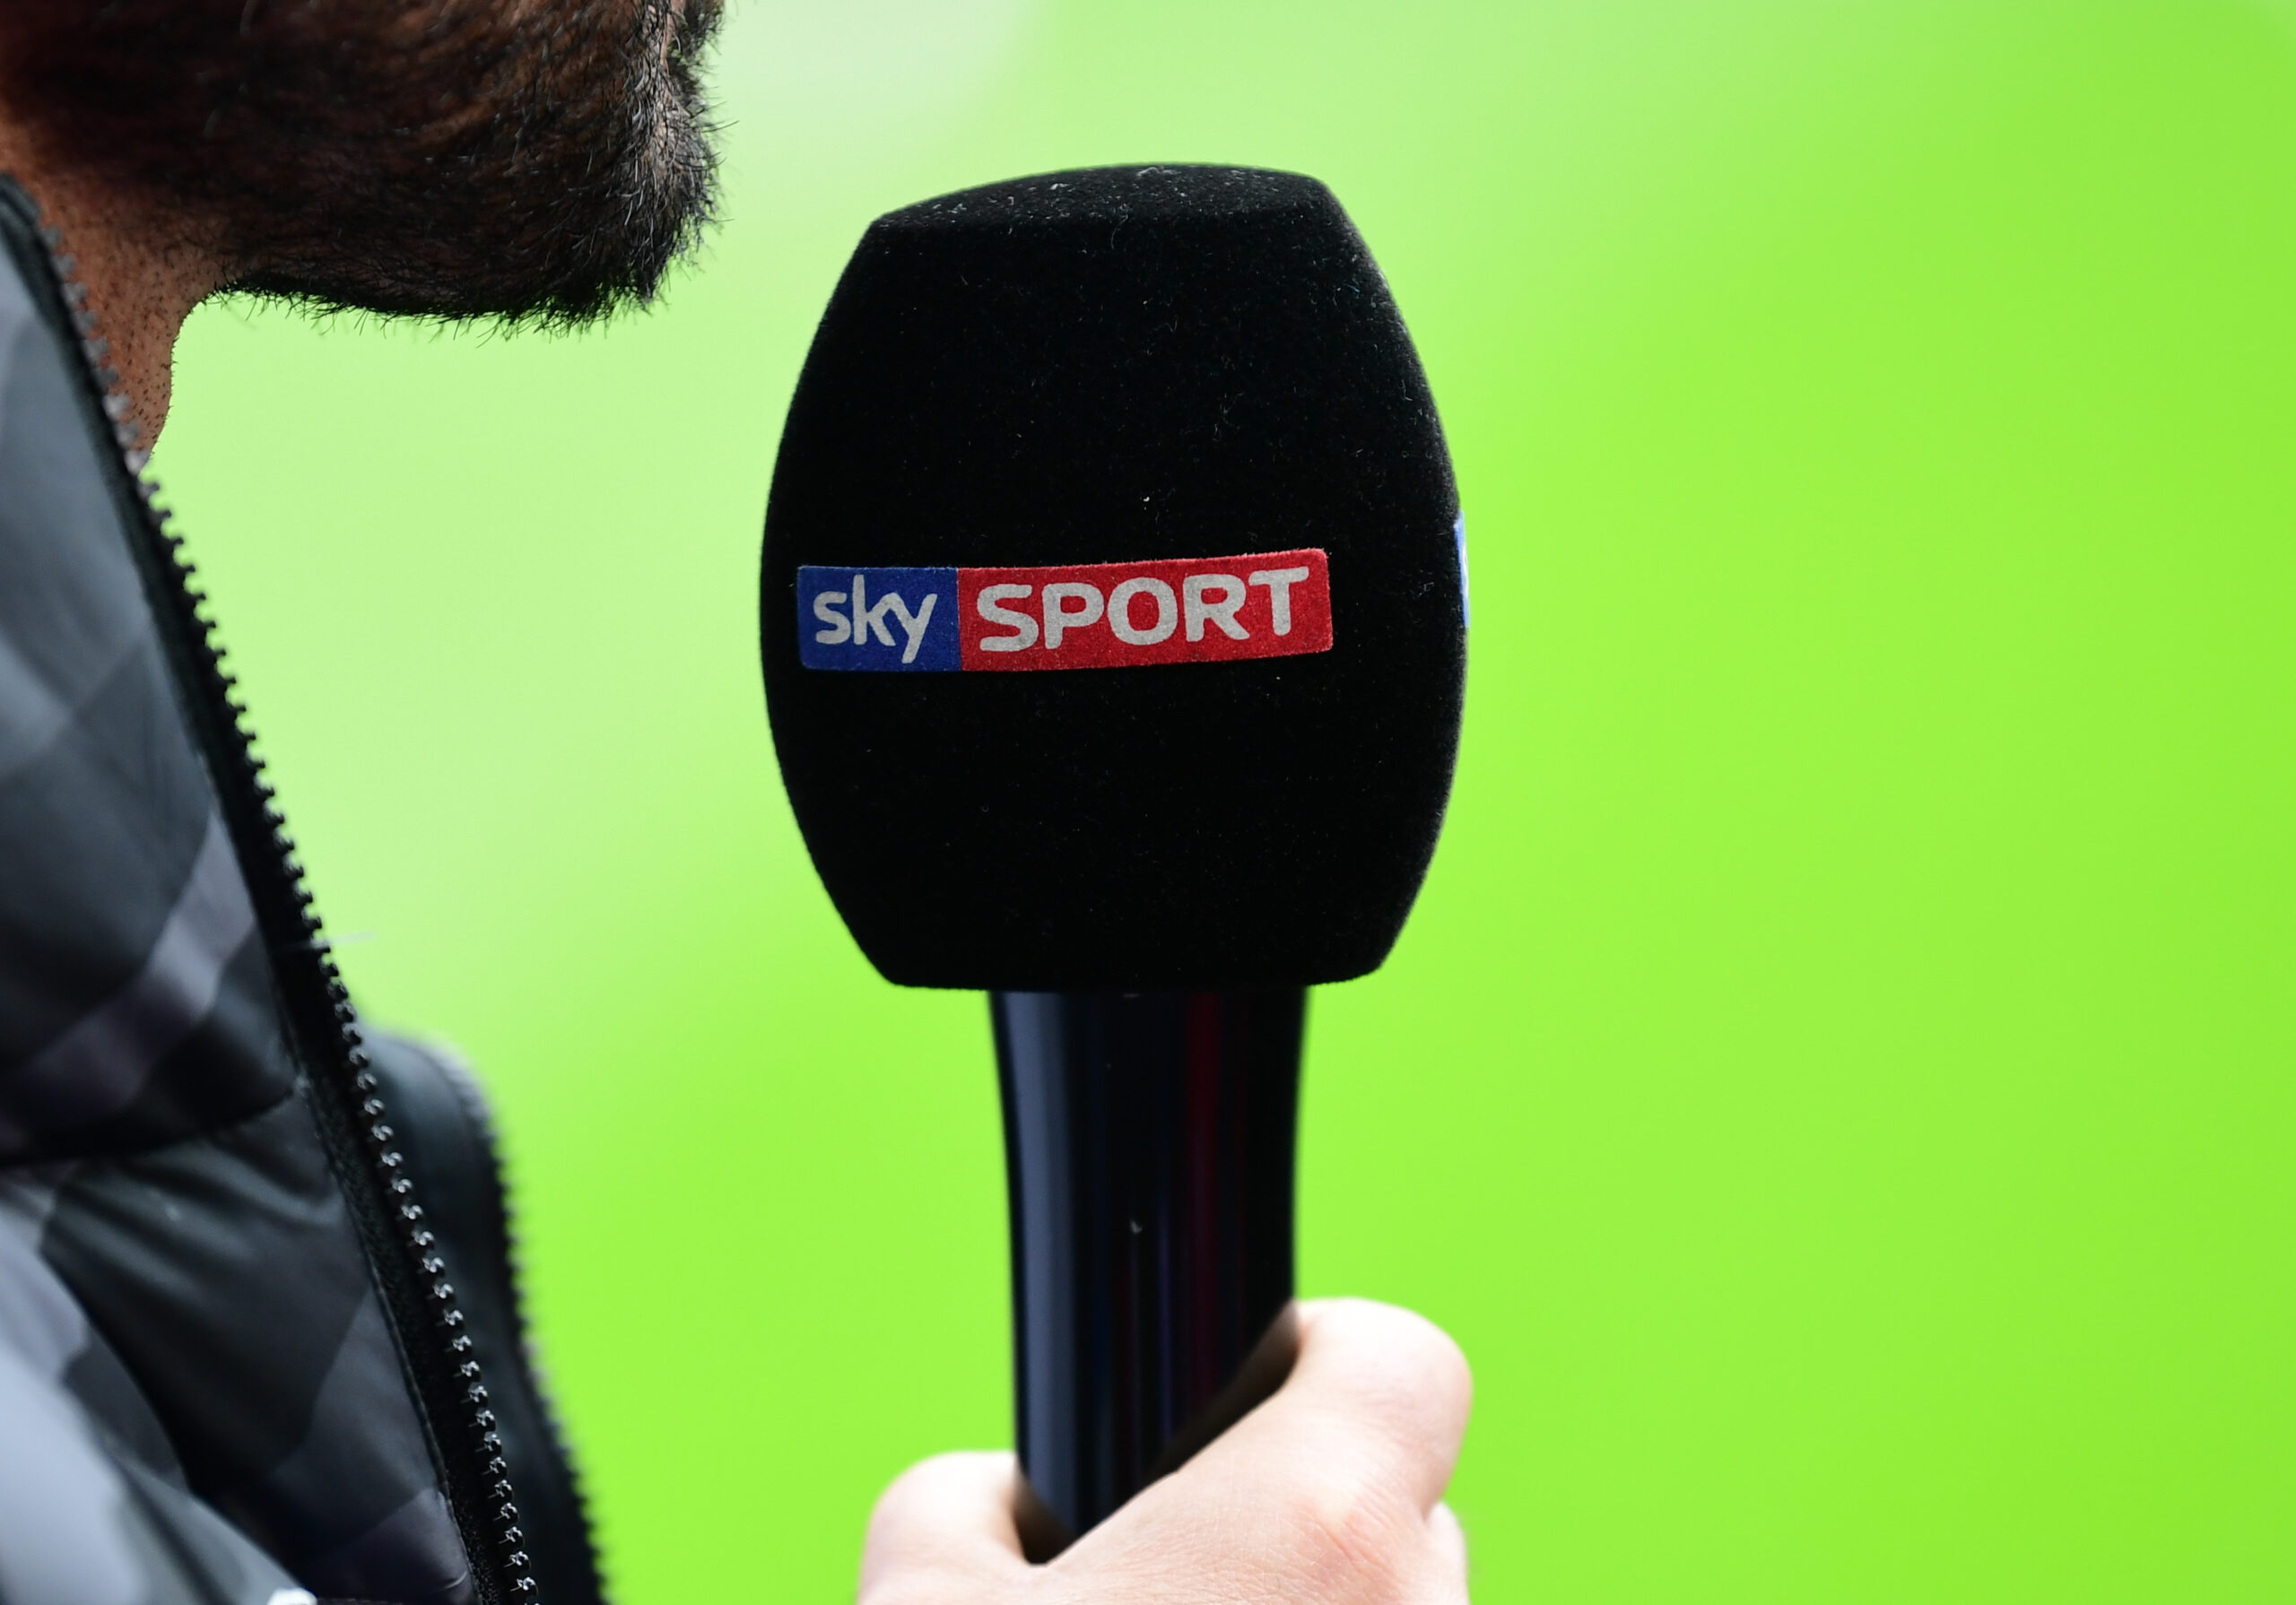 Symbolbild: Mensch spricht in Mikrofon mit „Sky Sport“-Beschriftung